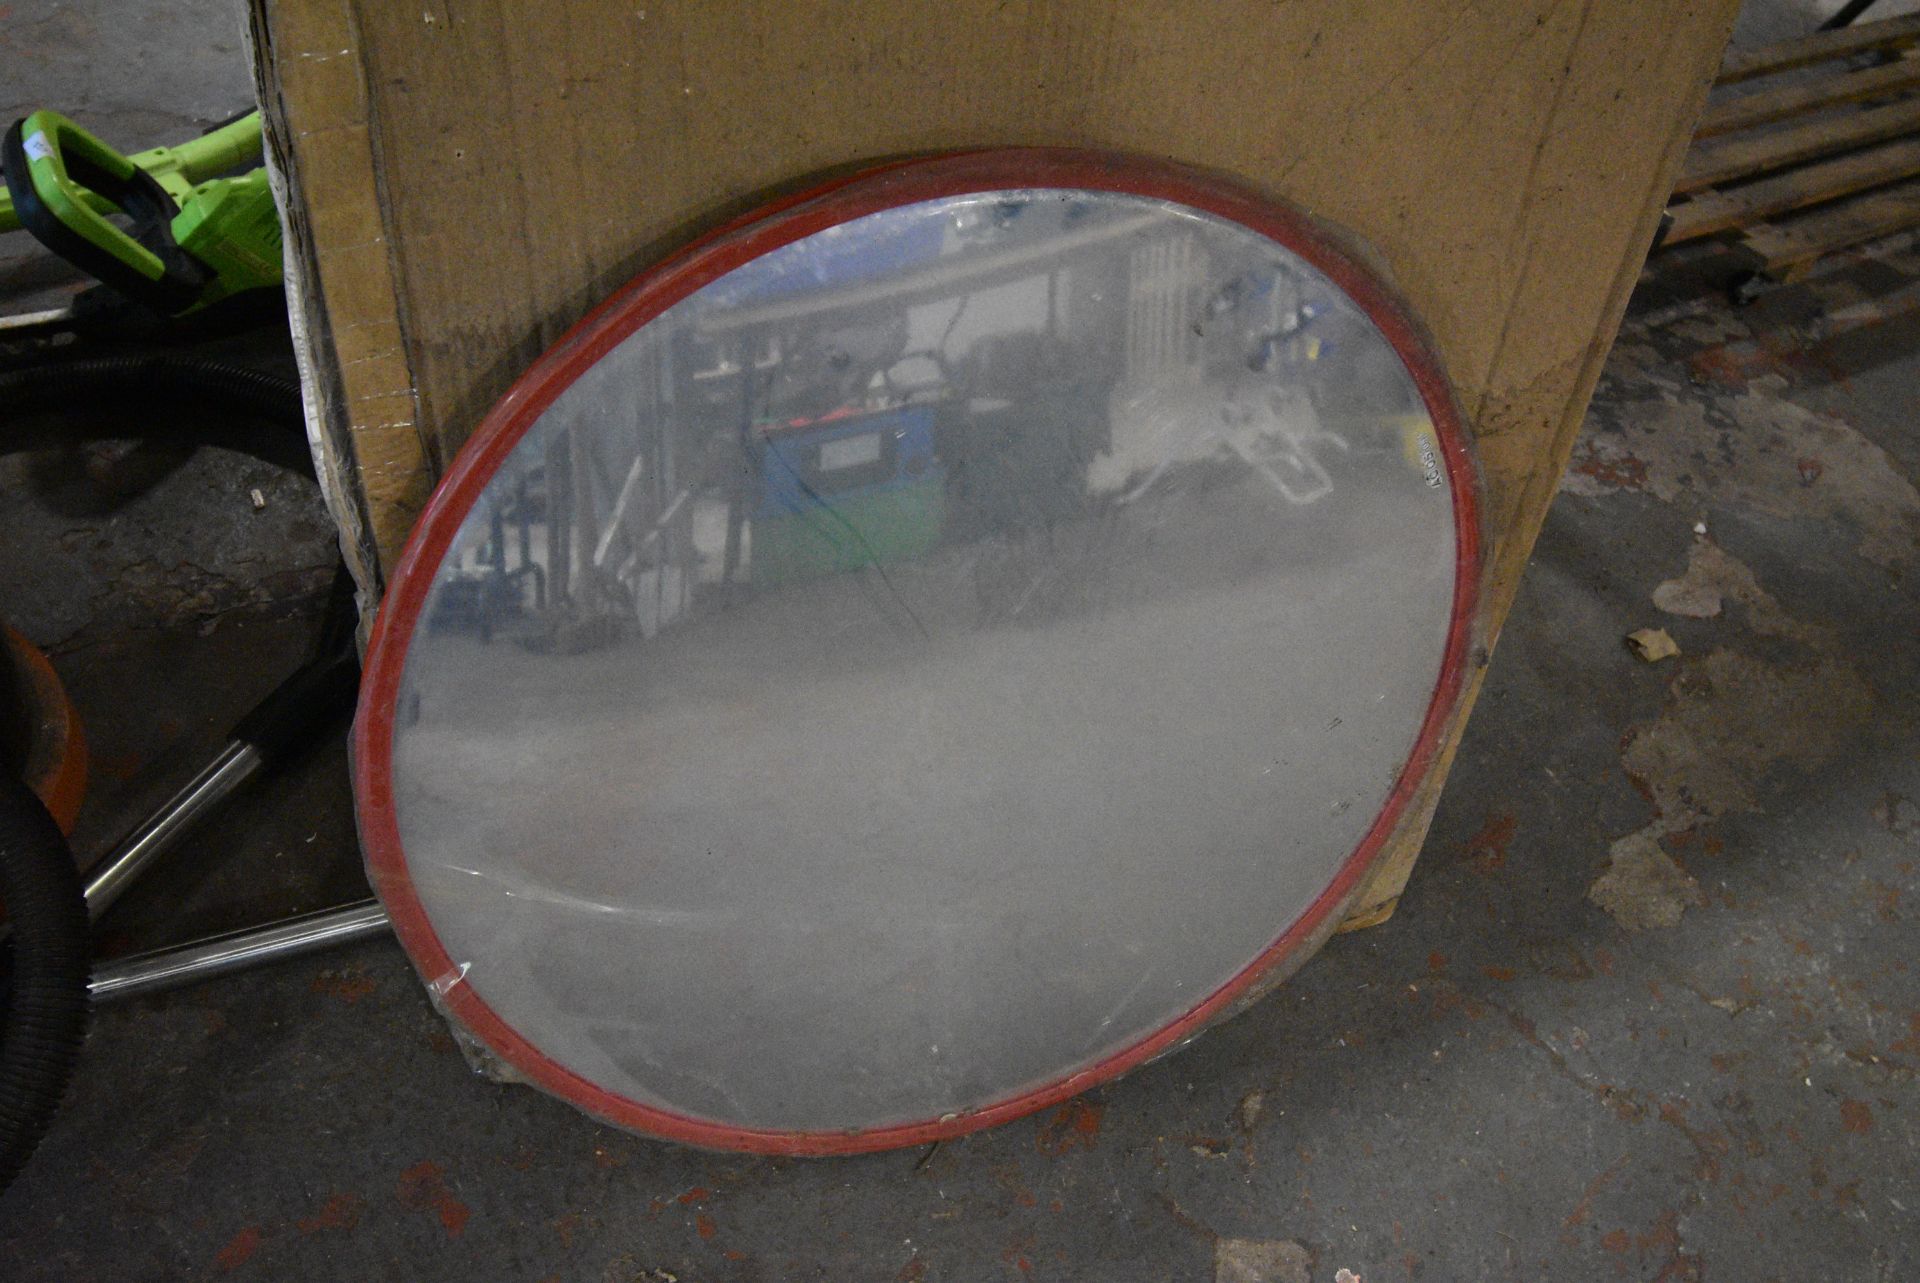 Dancop Circular Mirror